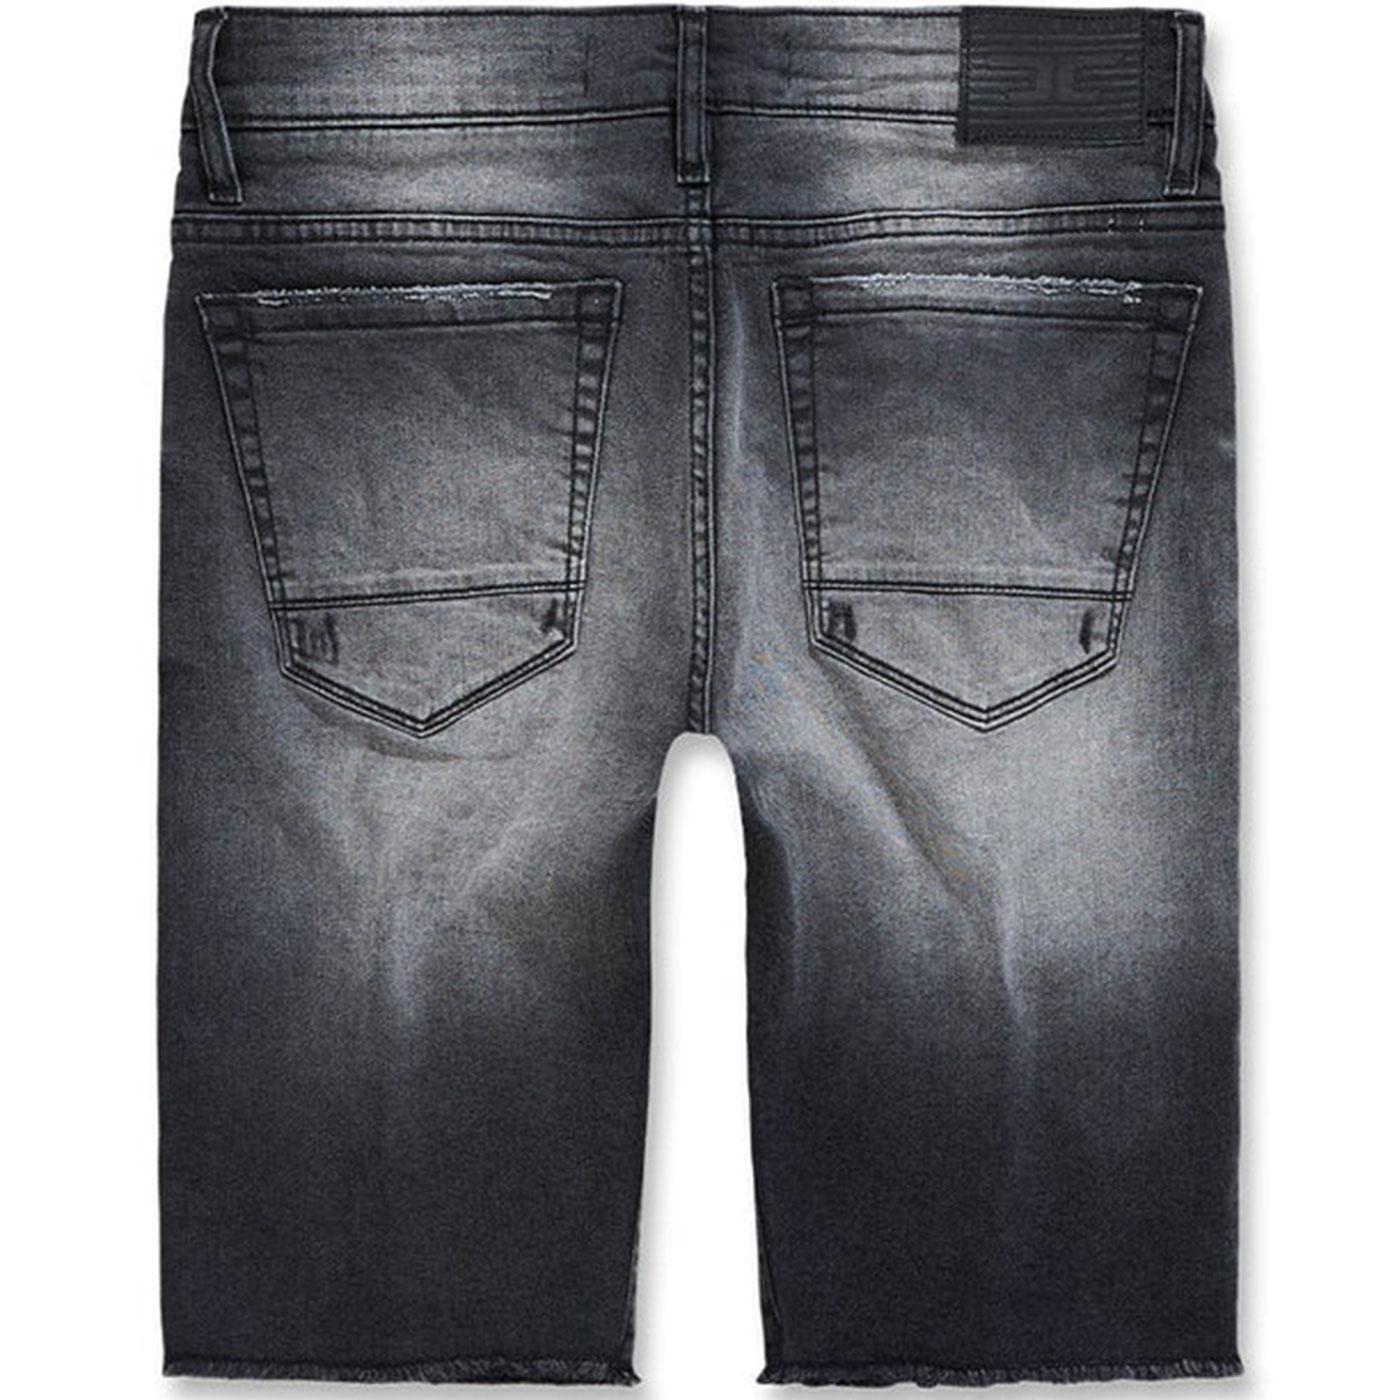 Arlington Denim Shorts (Industrial Black)